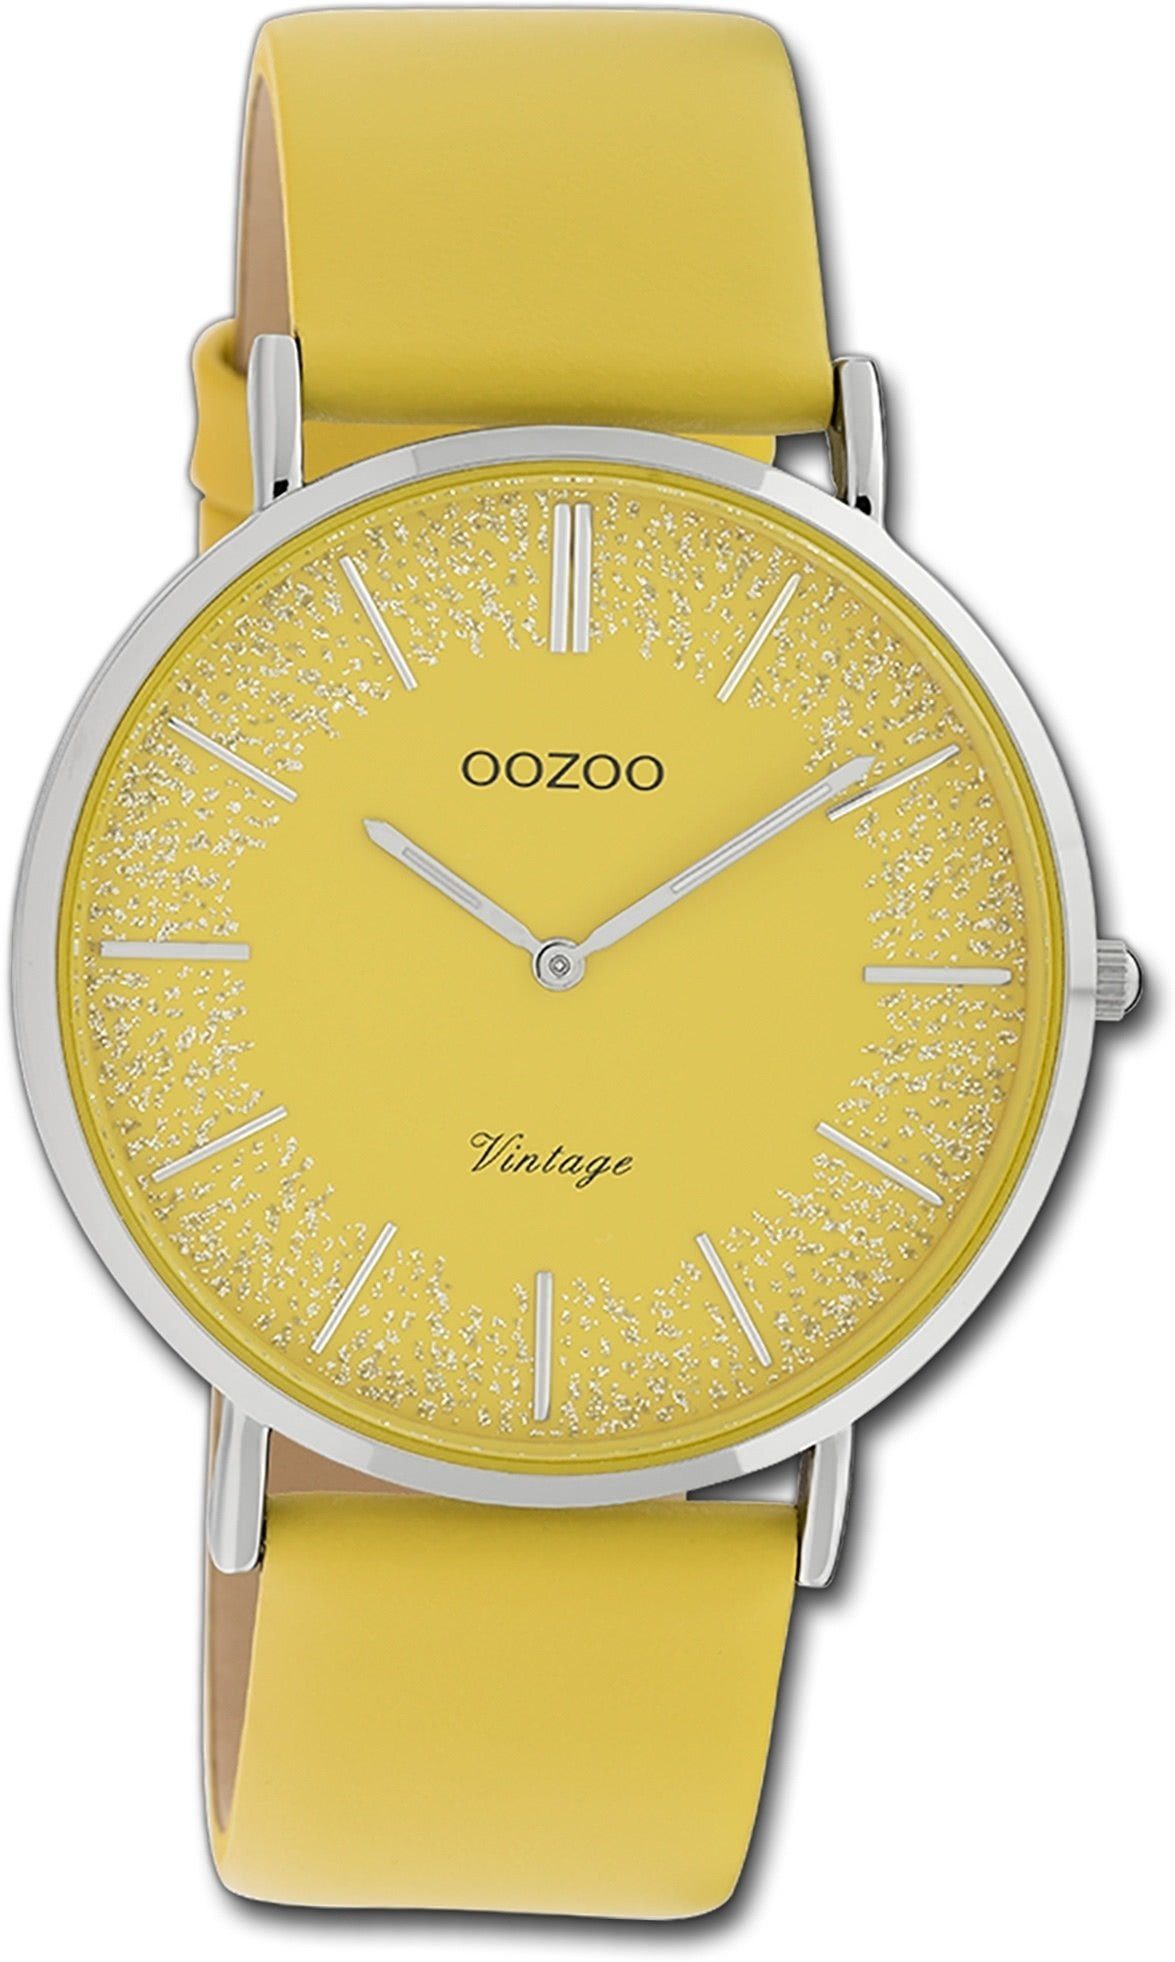 Damen Lederarmband Oozoo (ca. 40mm) groß Slim, Ultra rundes Armbanduhr Quarzuhr Gehäuse, Damenuhr OOZOO gelb,